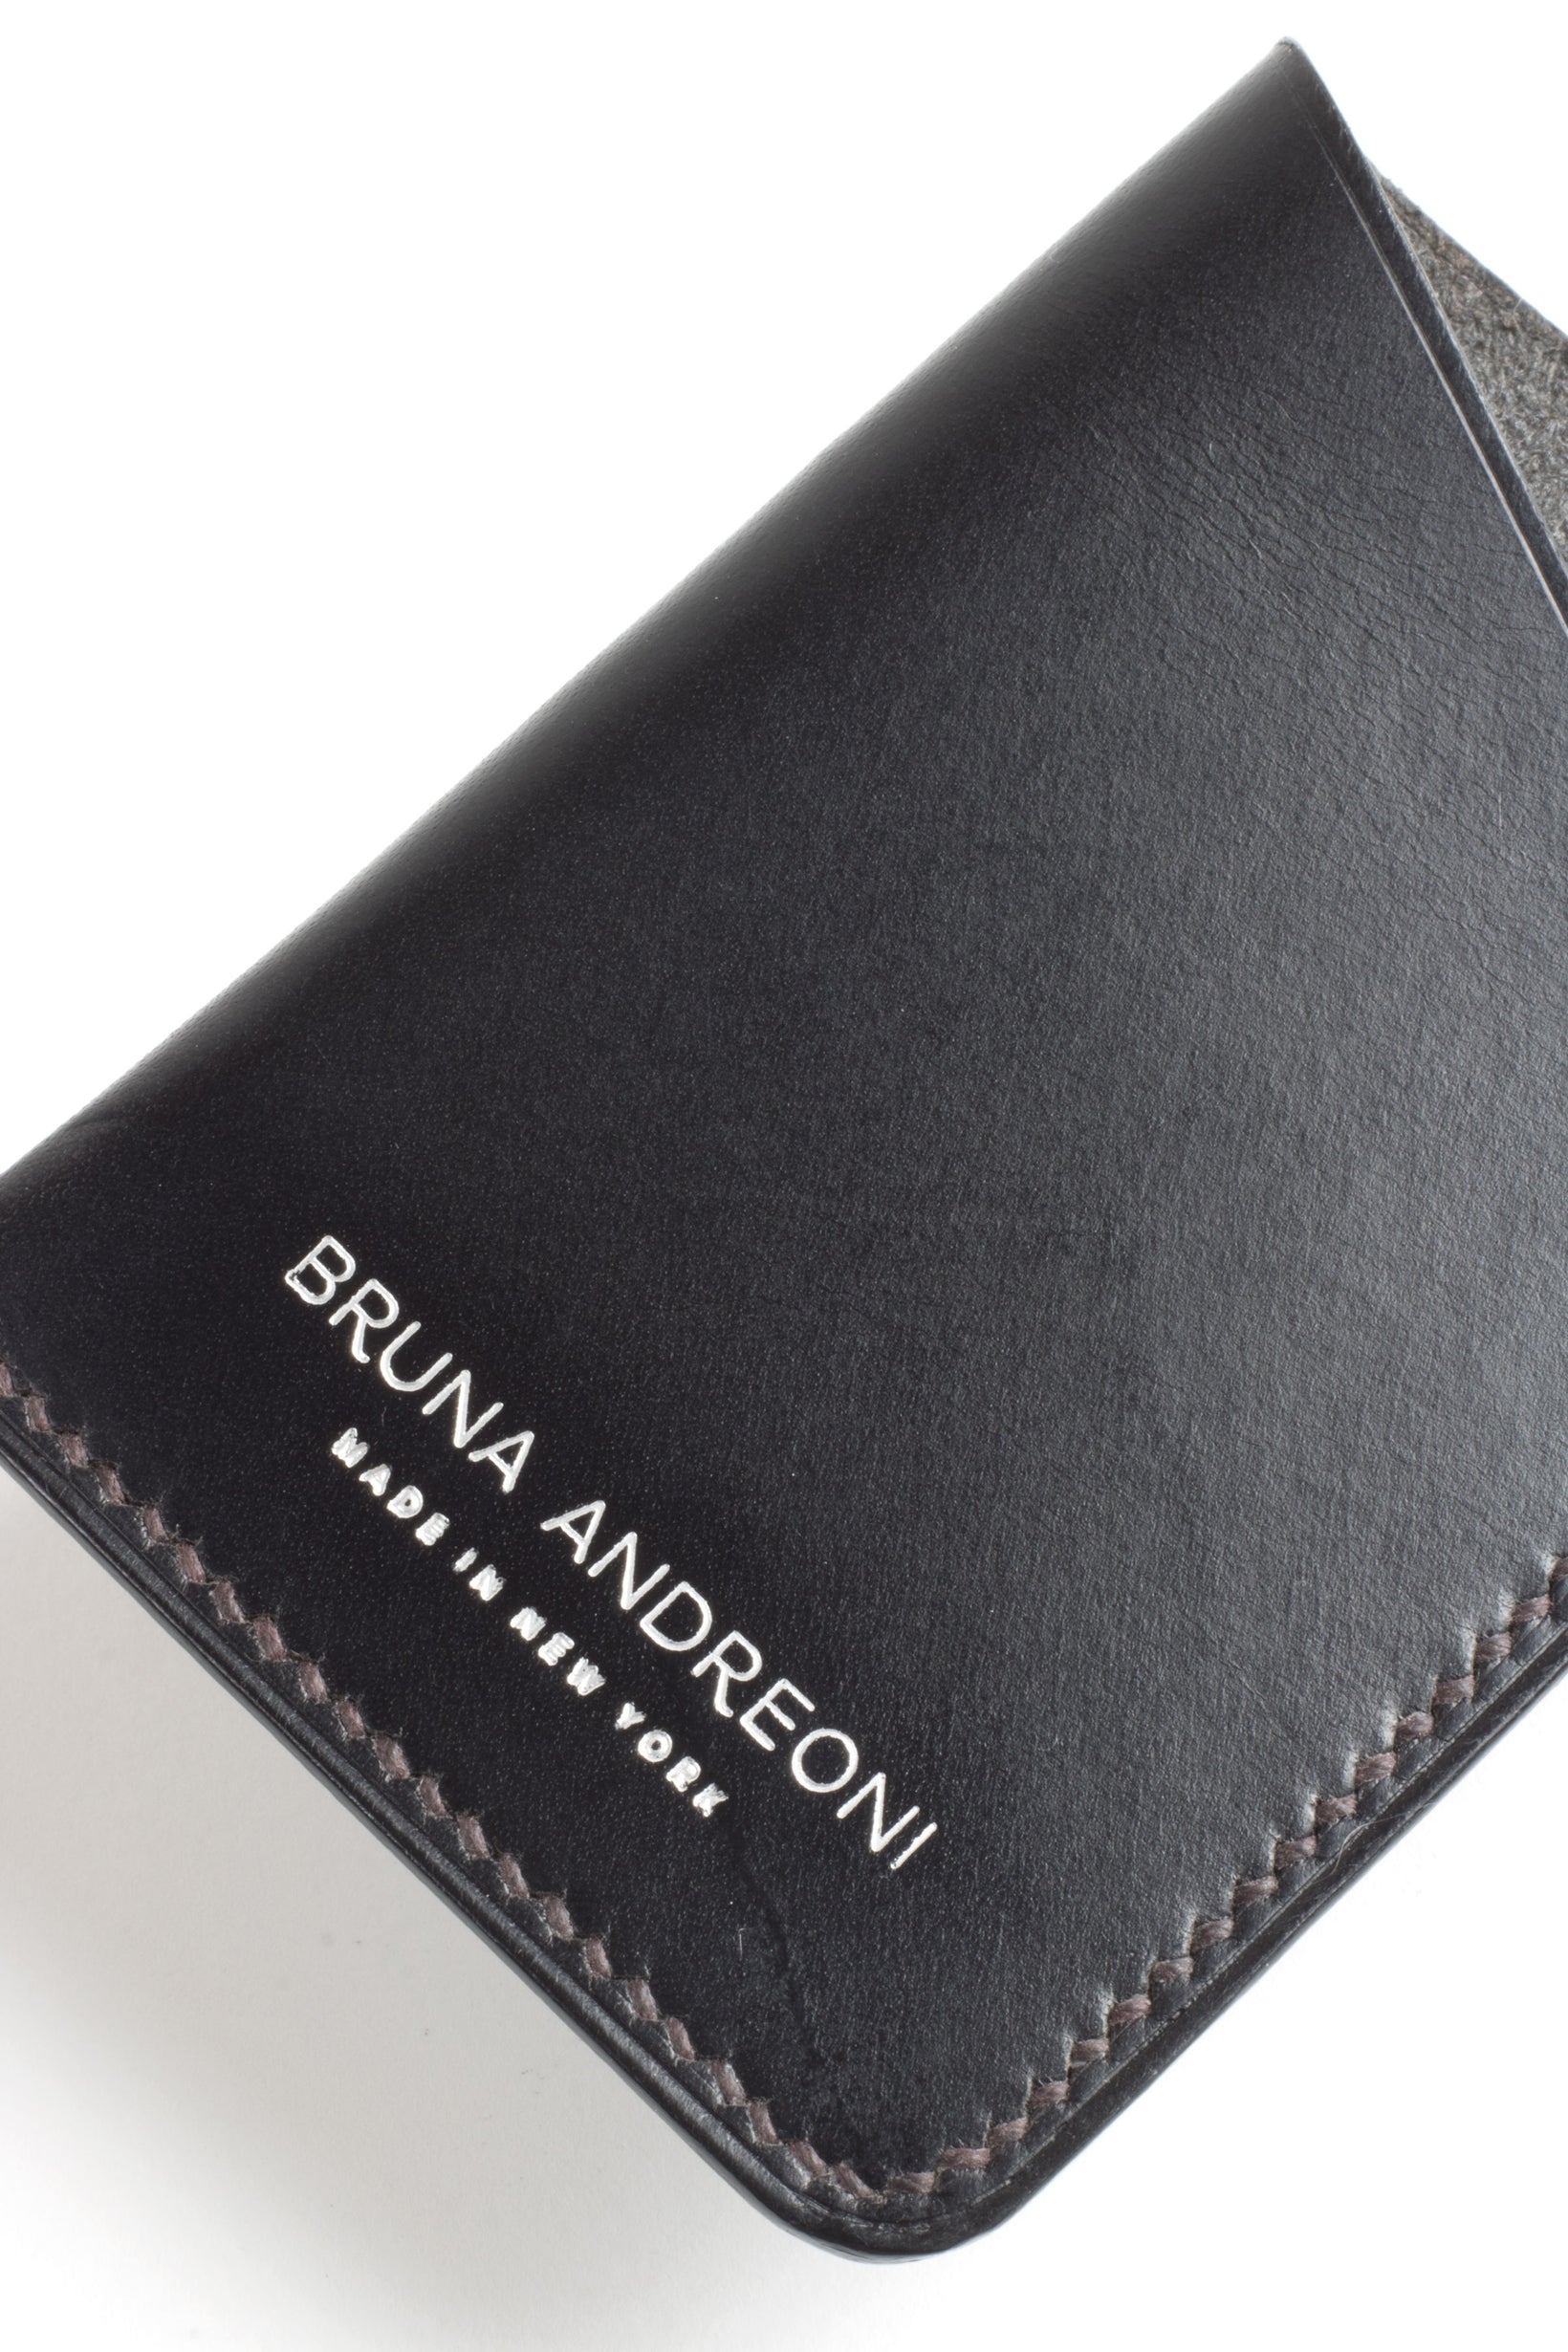 Bruna Andreoni Slim Card Case Black Smooth